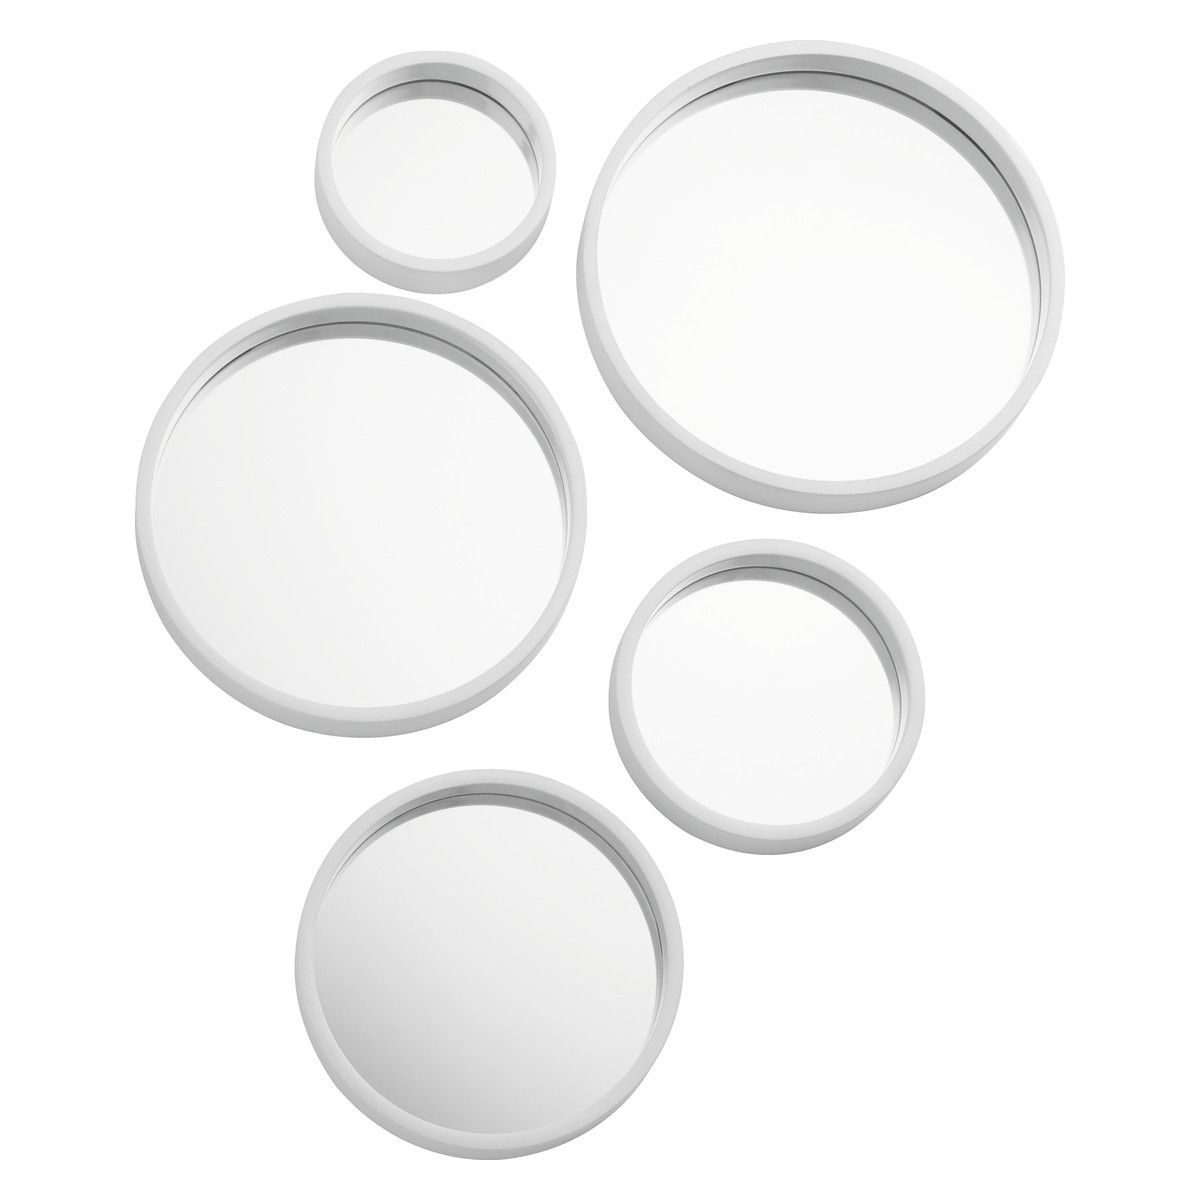 Mirror Mirror Set Of 5 White Round Mirrors Buy Now At Habitat Uk Pertaining To White Round Mirror (View 3 of 15)